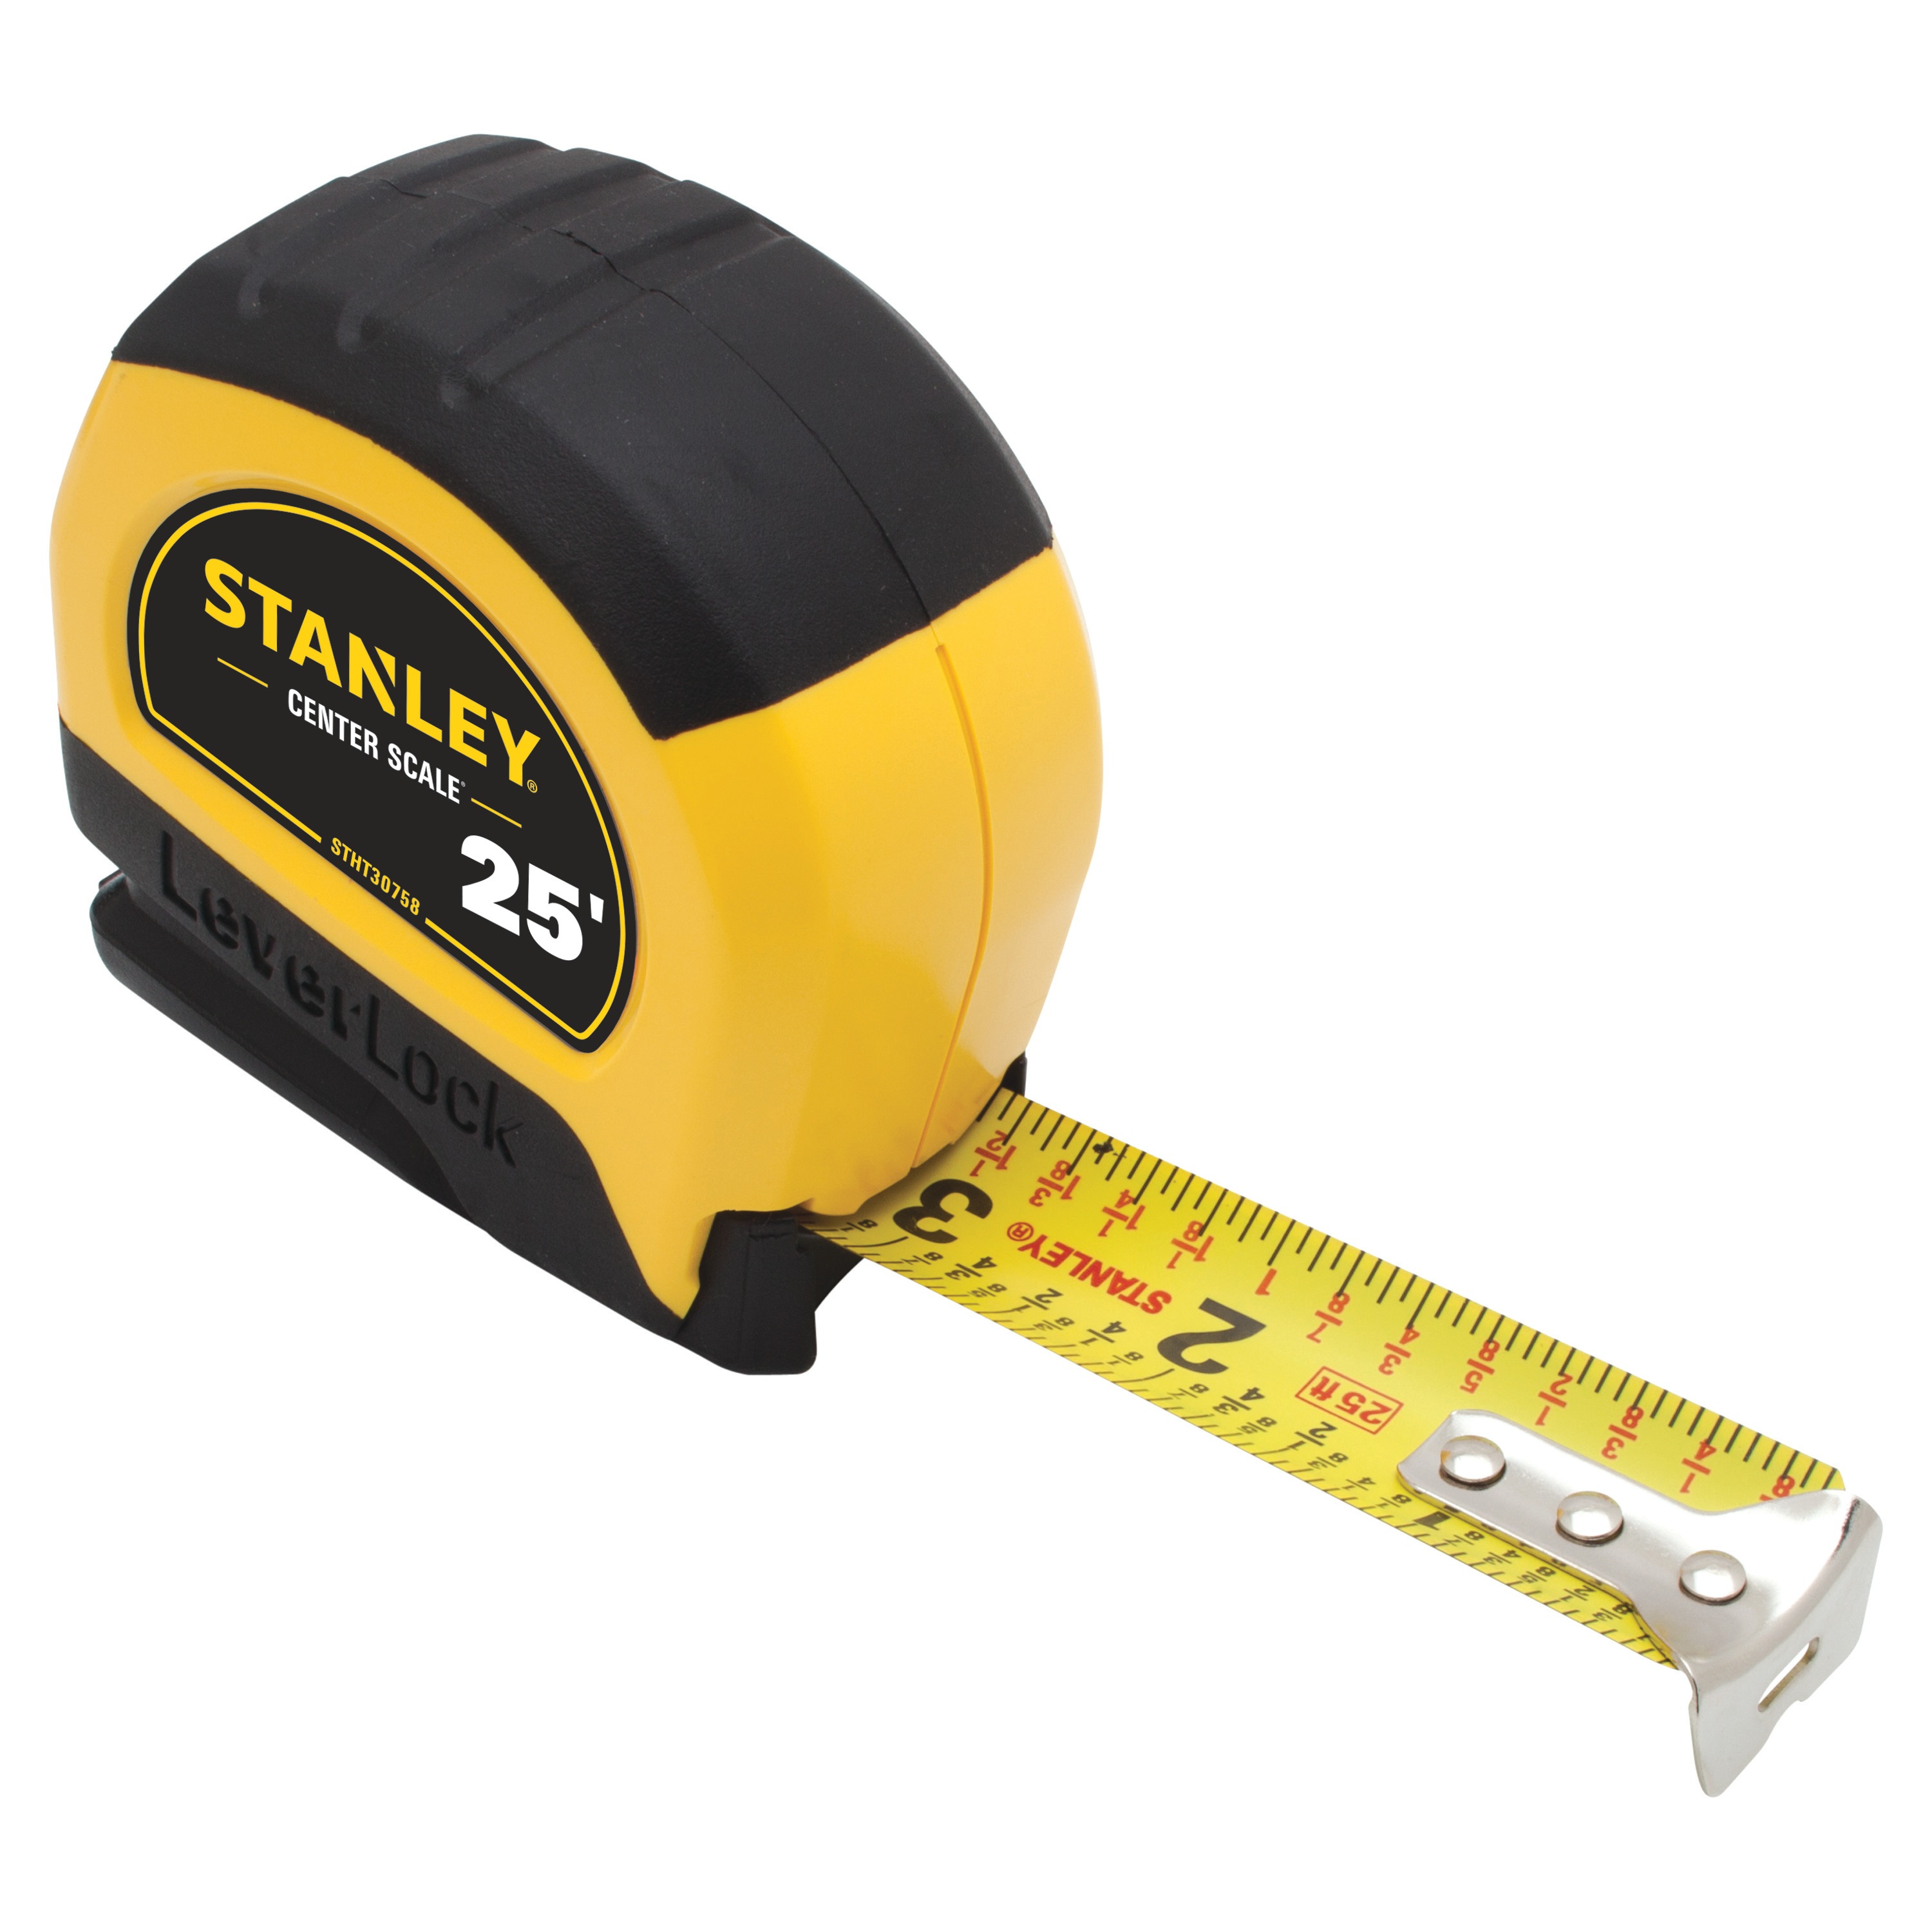 Stanley Tools - 25 ft Center Read LEVERLOCK Tape Measure - STHT30758L